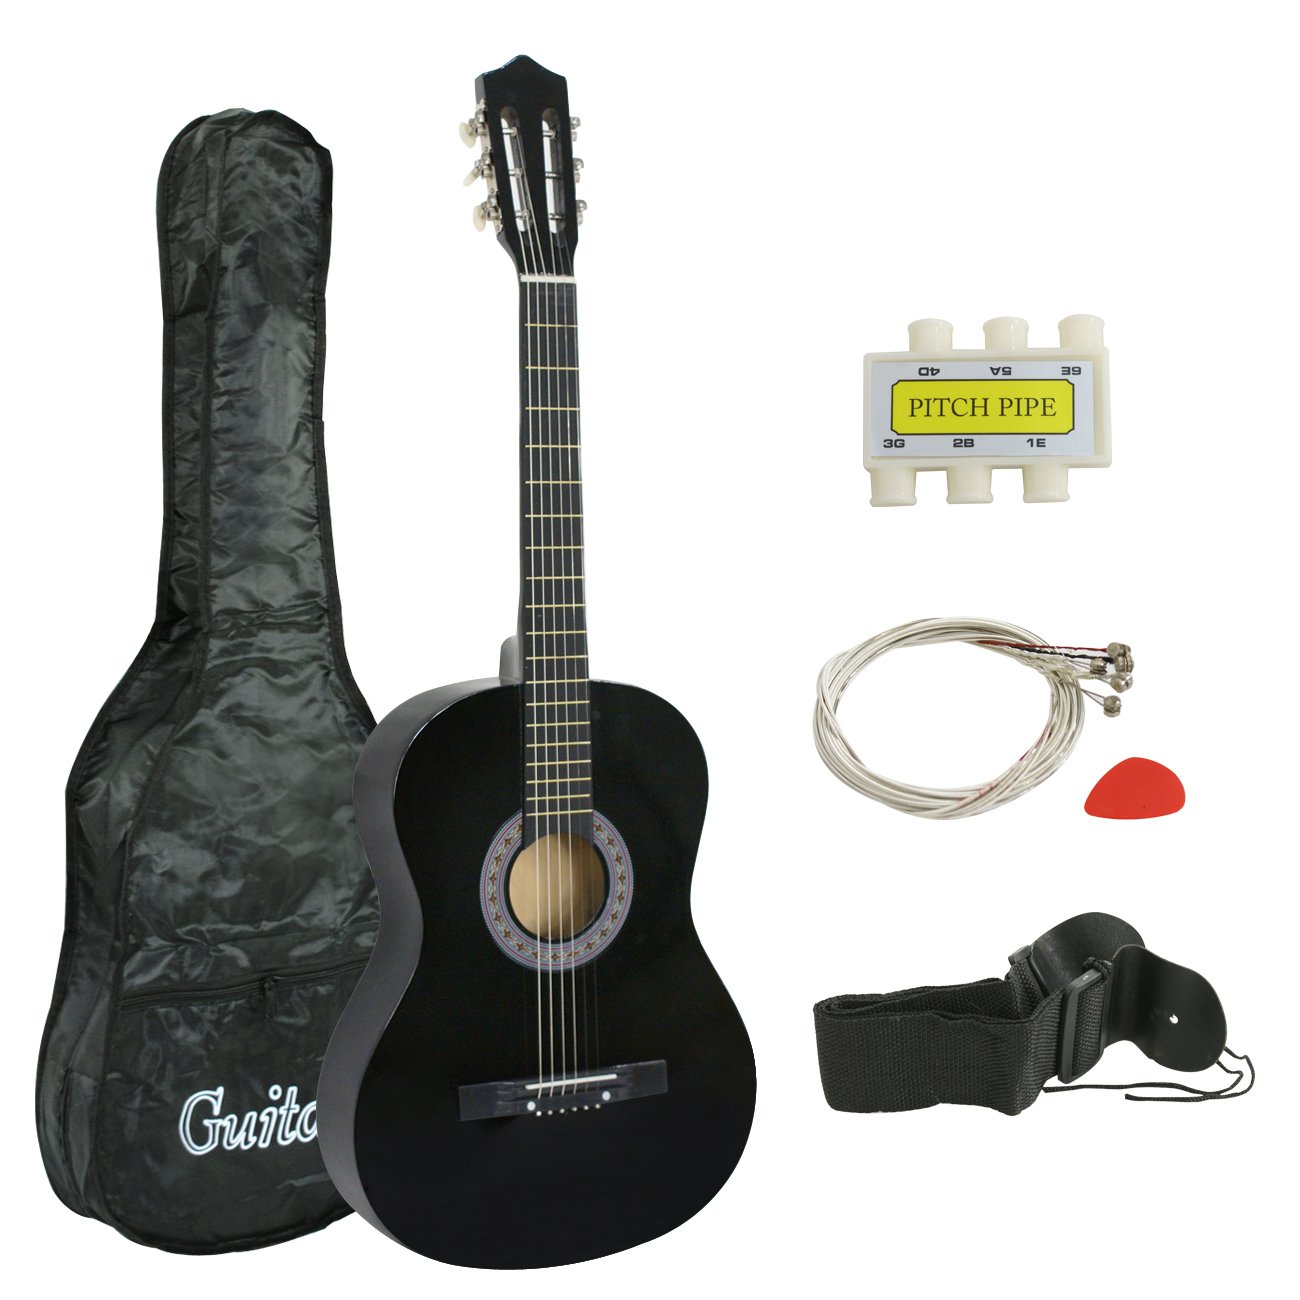 Smartxchoices 38" Kids Acoustic Guitar Bundle Kit for Starter Beginner Music Lovers, 6-String Folk Guitar